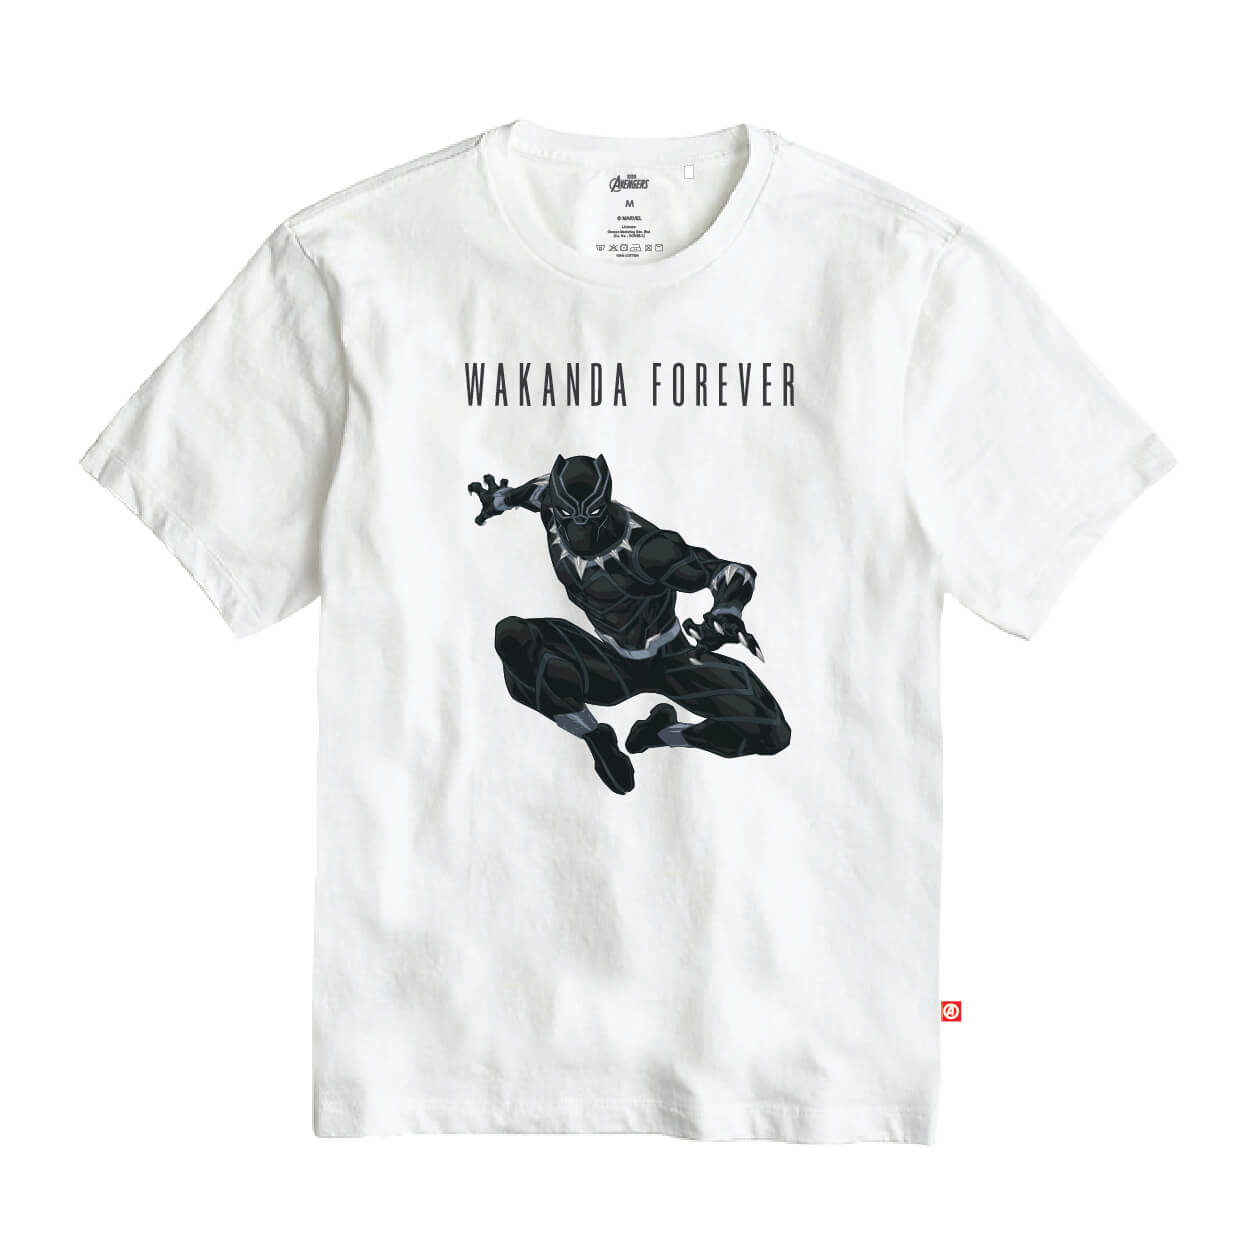 I SENSE Graphic Black Kid COMMON T-Shirt Marvel Panther